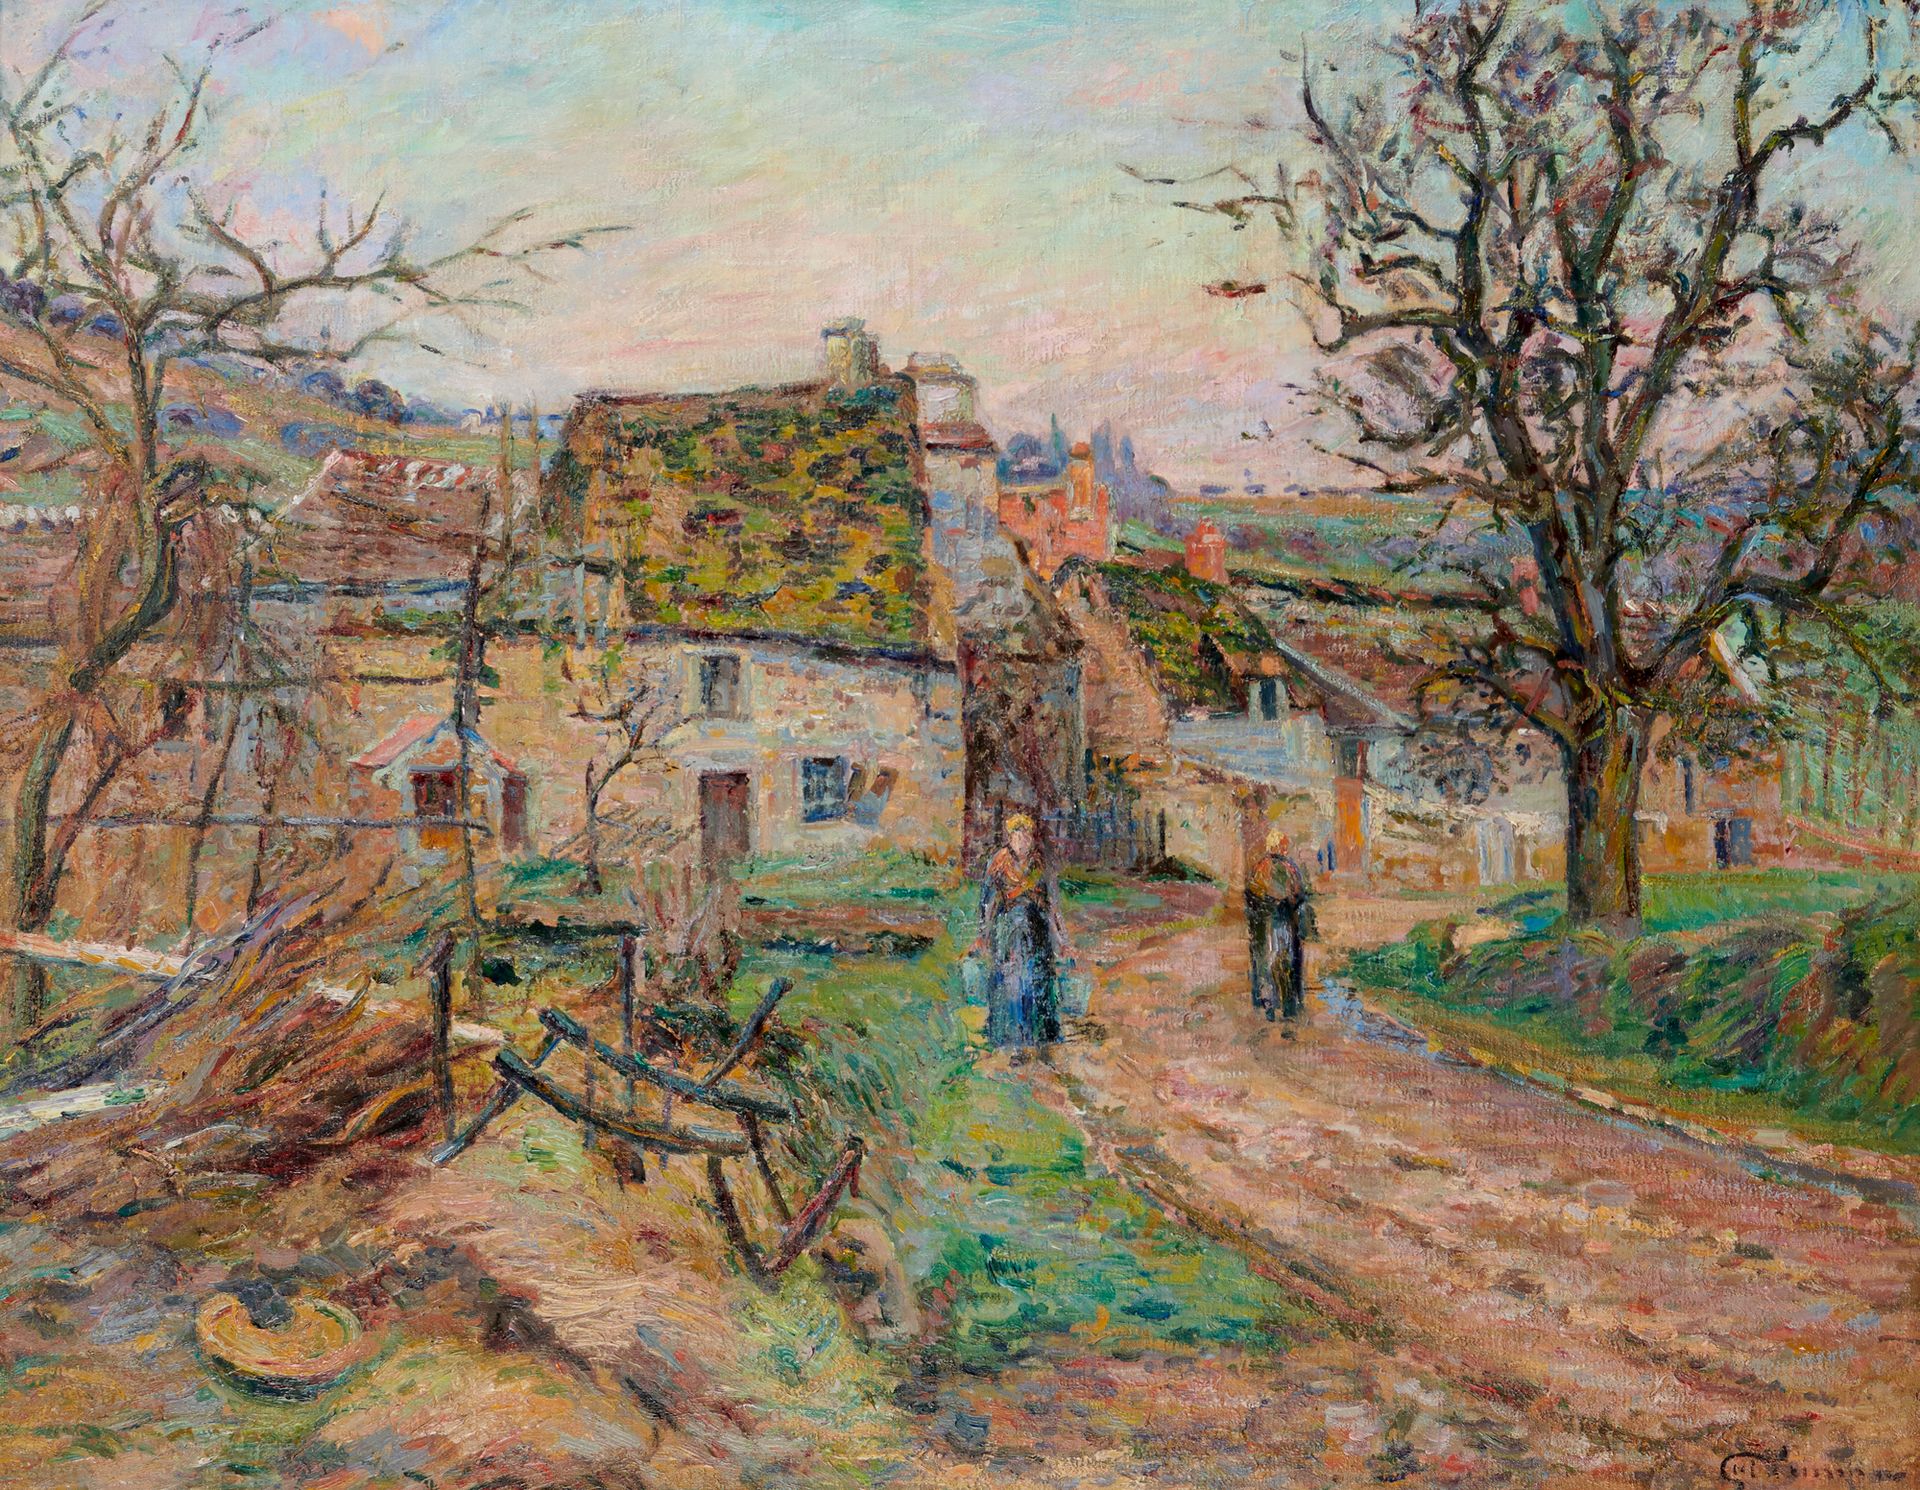 Armand GUILLAUMIN 1841-1927 法国岛的村庄，约 1885 年
布面油画，右下方有签名
73 x 92 厘米

展览 ：
巴黎杜兰-鲁埃&hellip;